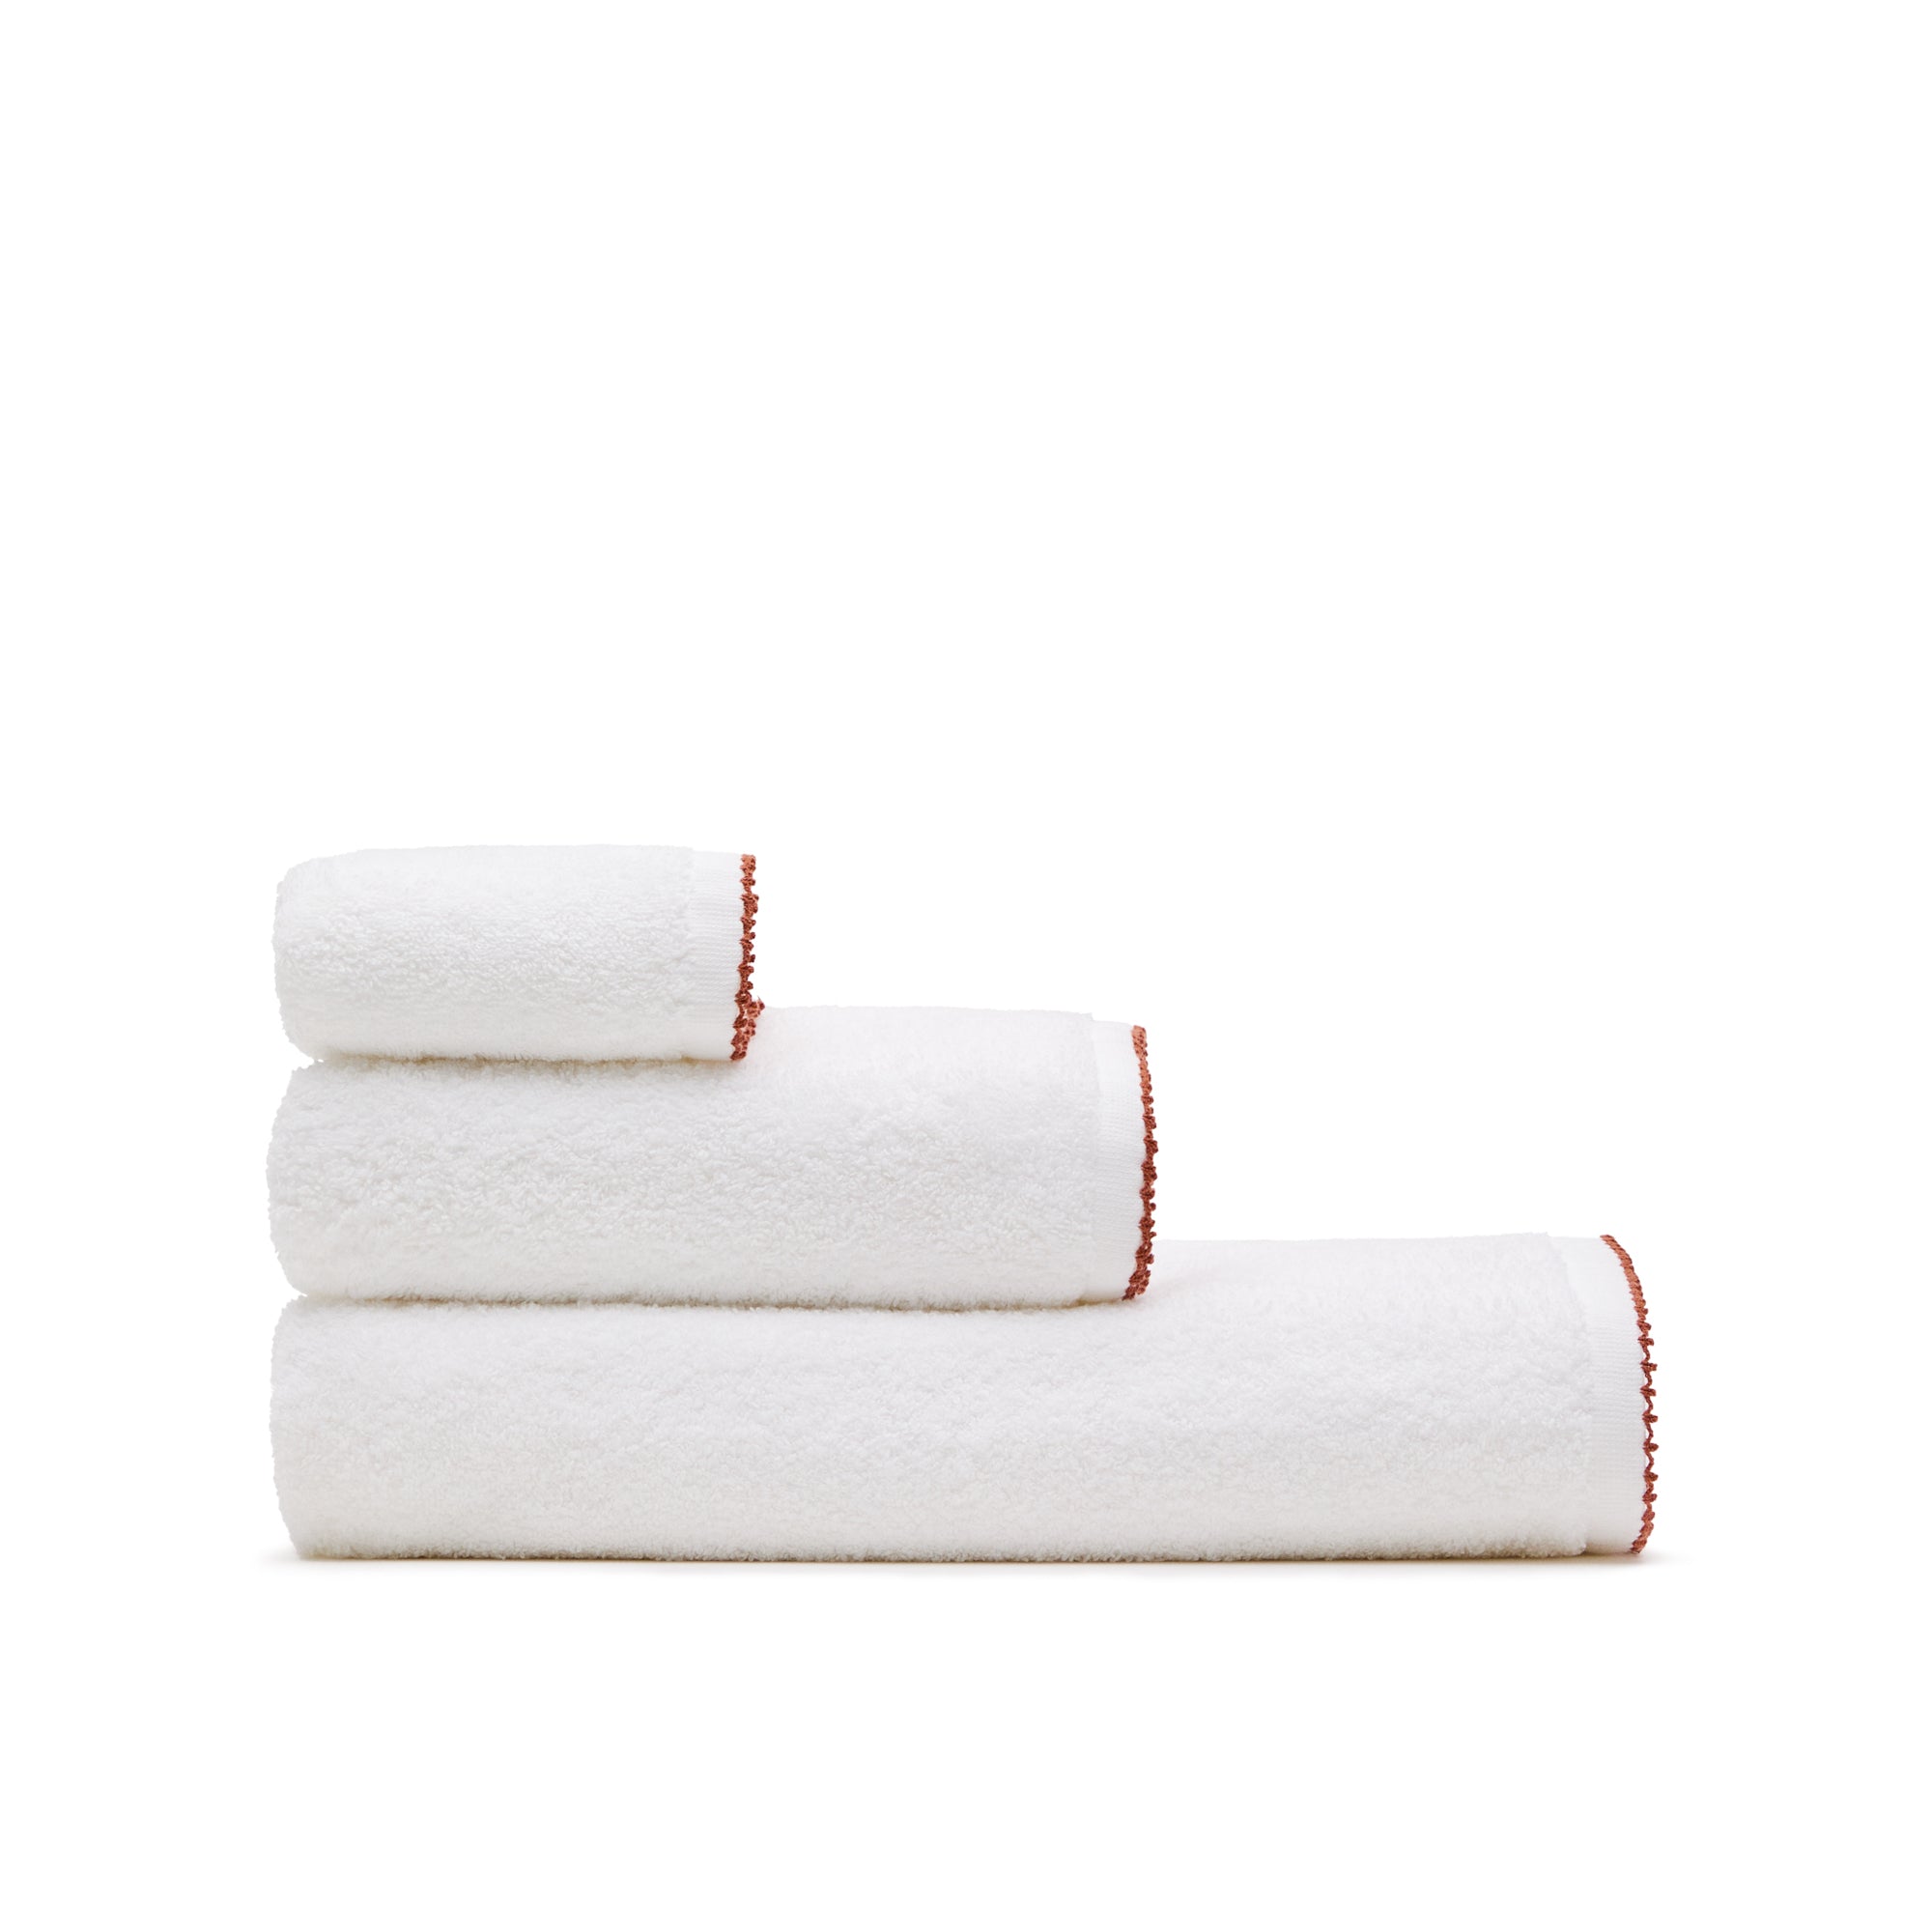 Sinami bath towel, 100% white cotton, with contrasting terracotta details, 90 x 150 cm